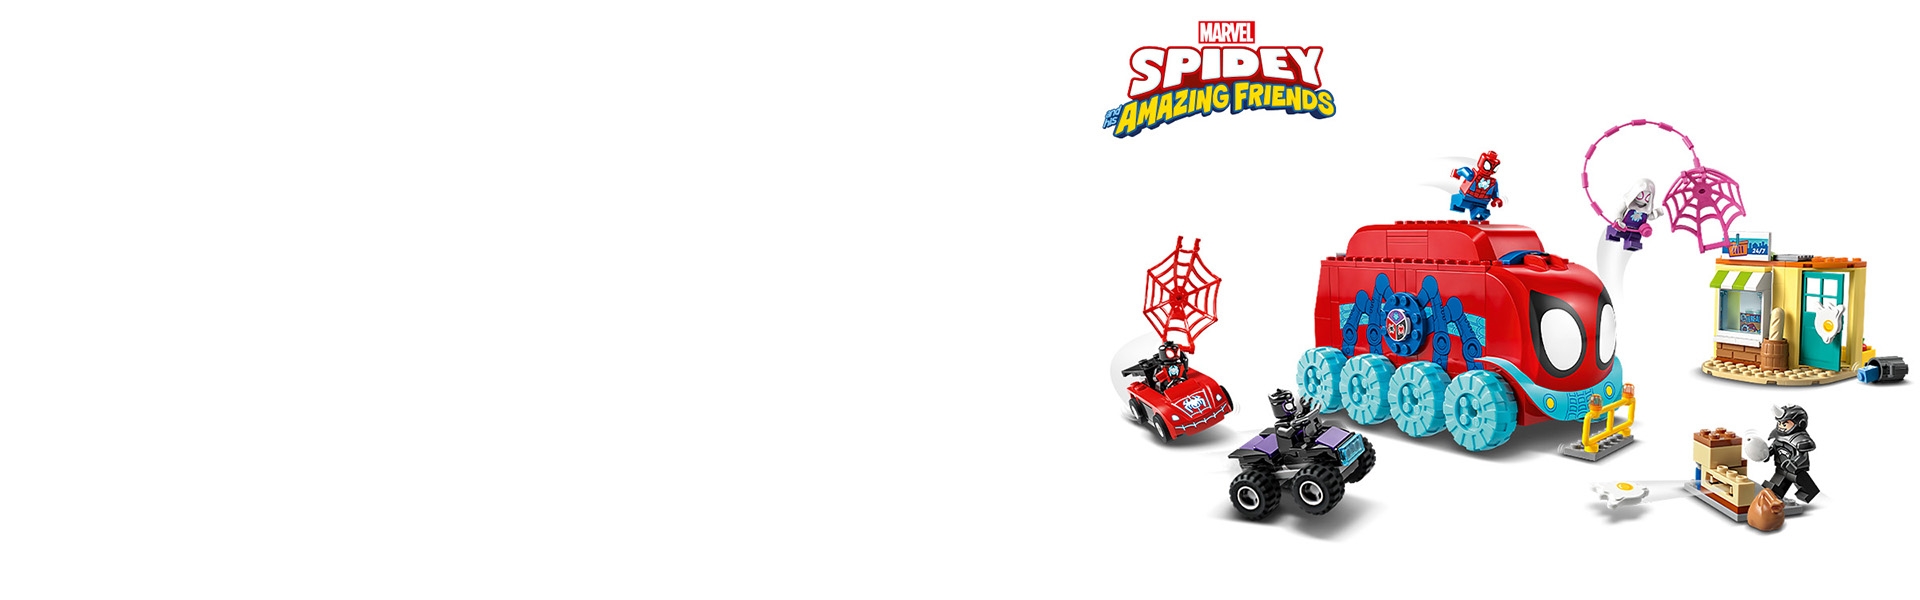 Team Spidey's Mobile Headquarters 10791 | Spider-Man | Buy online 